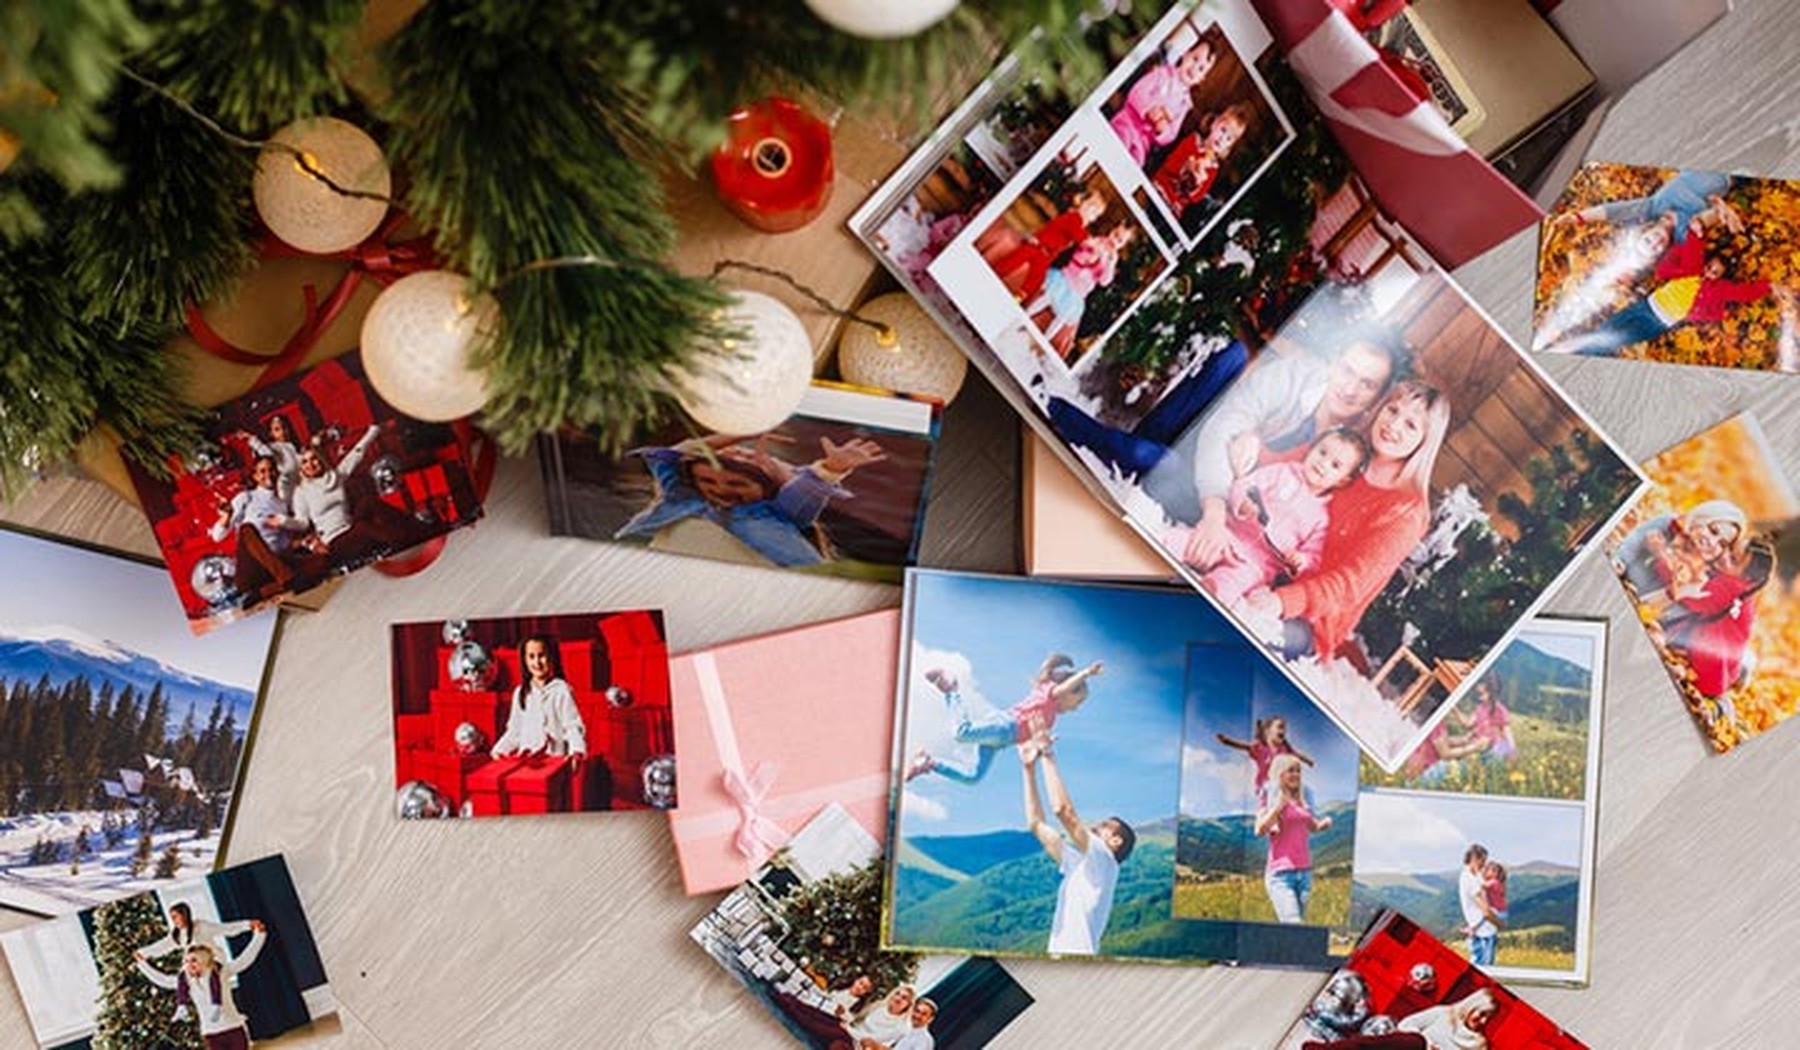 fotoboek en foto's onder kerstboom